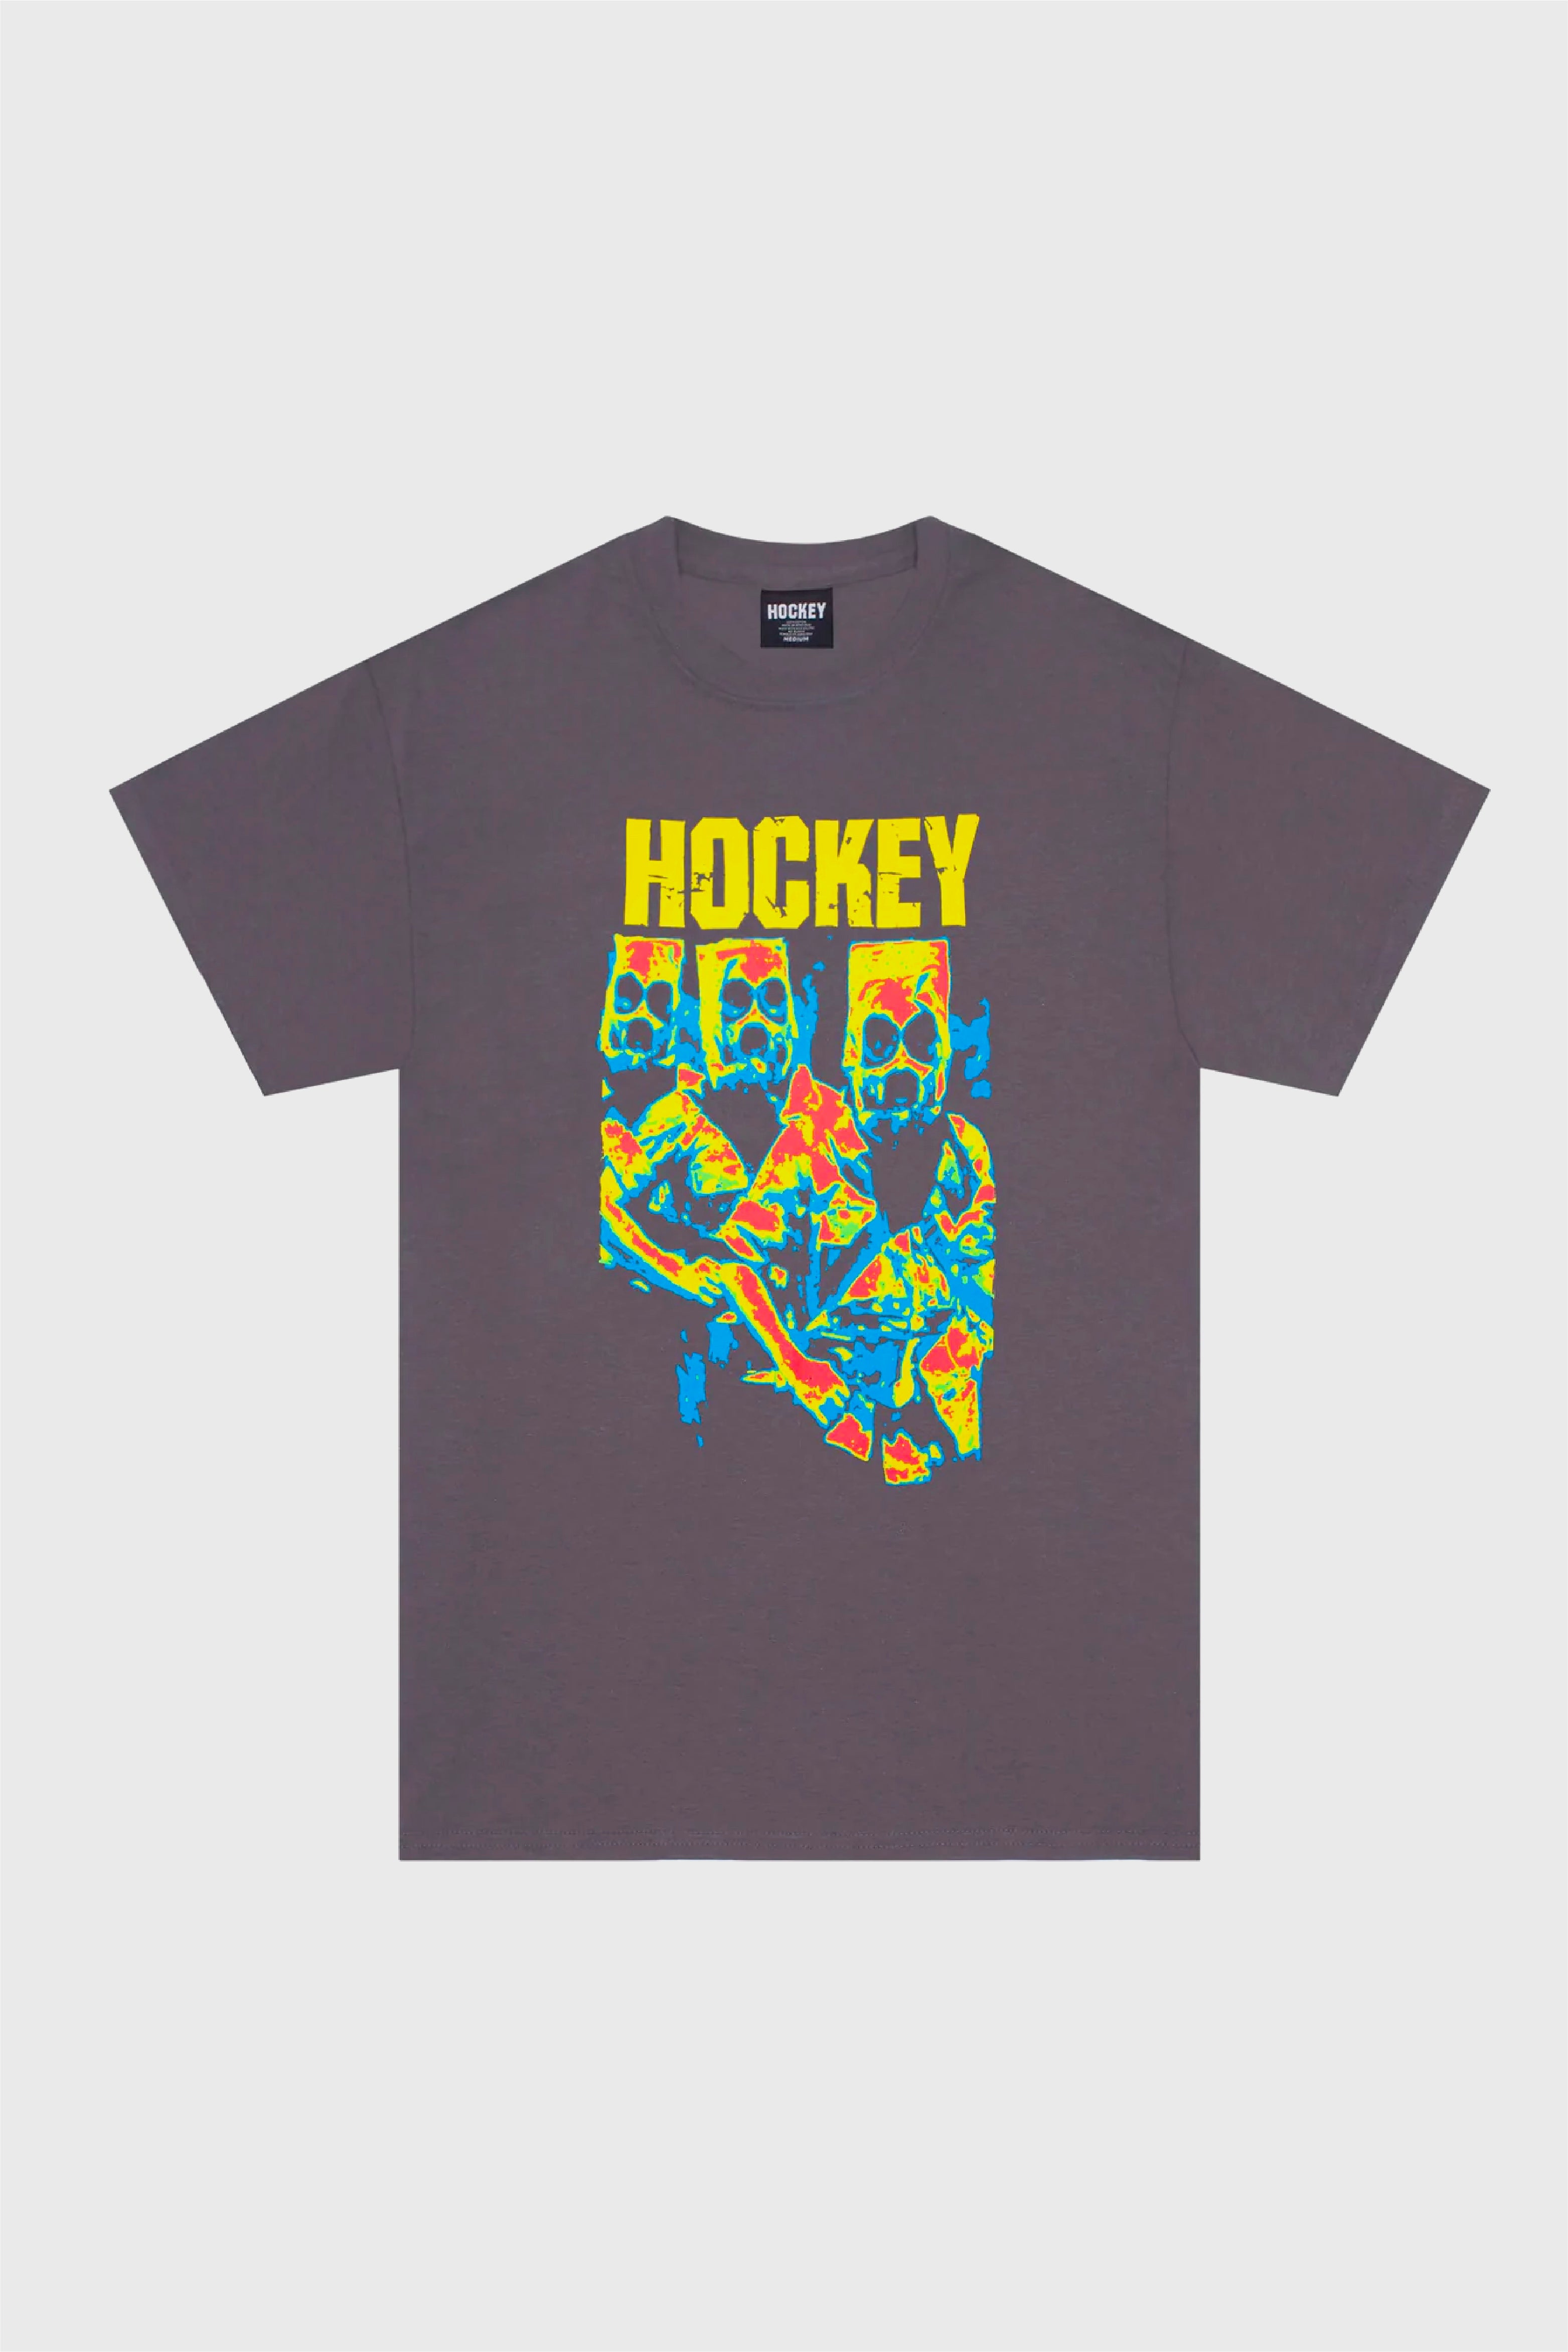 Selectshop FRAME - HOCKEY Bag Head 3 Tee T-Shirts Dubai